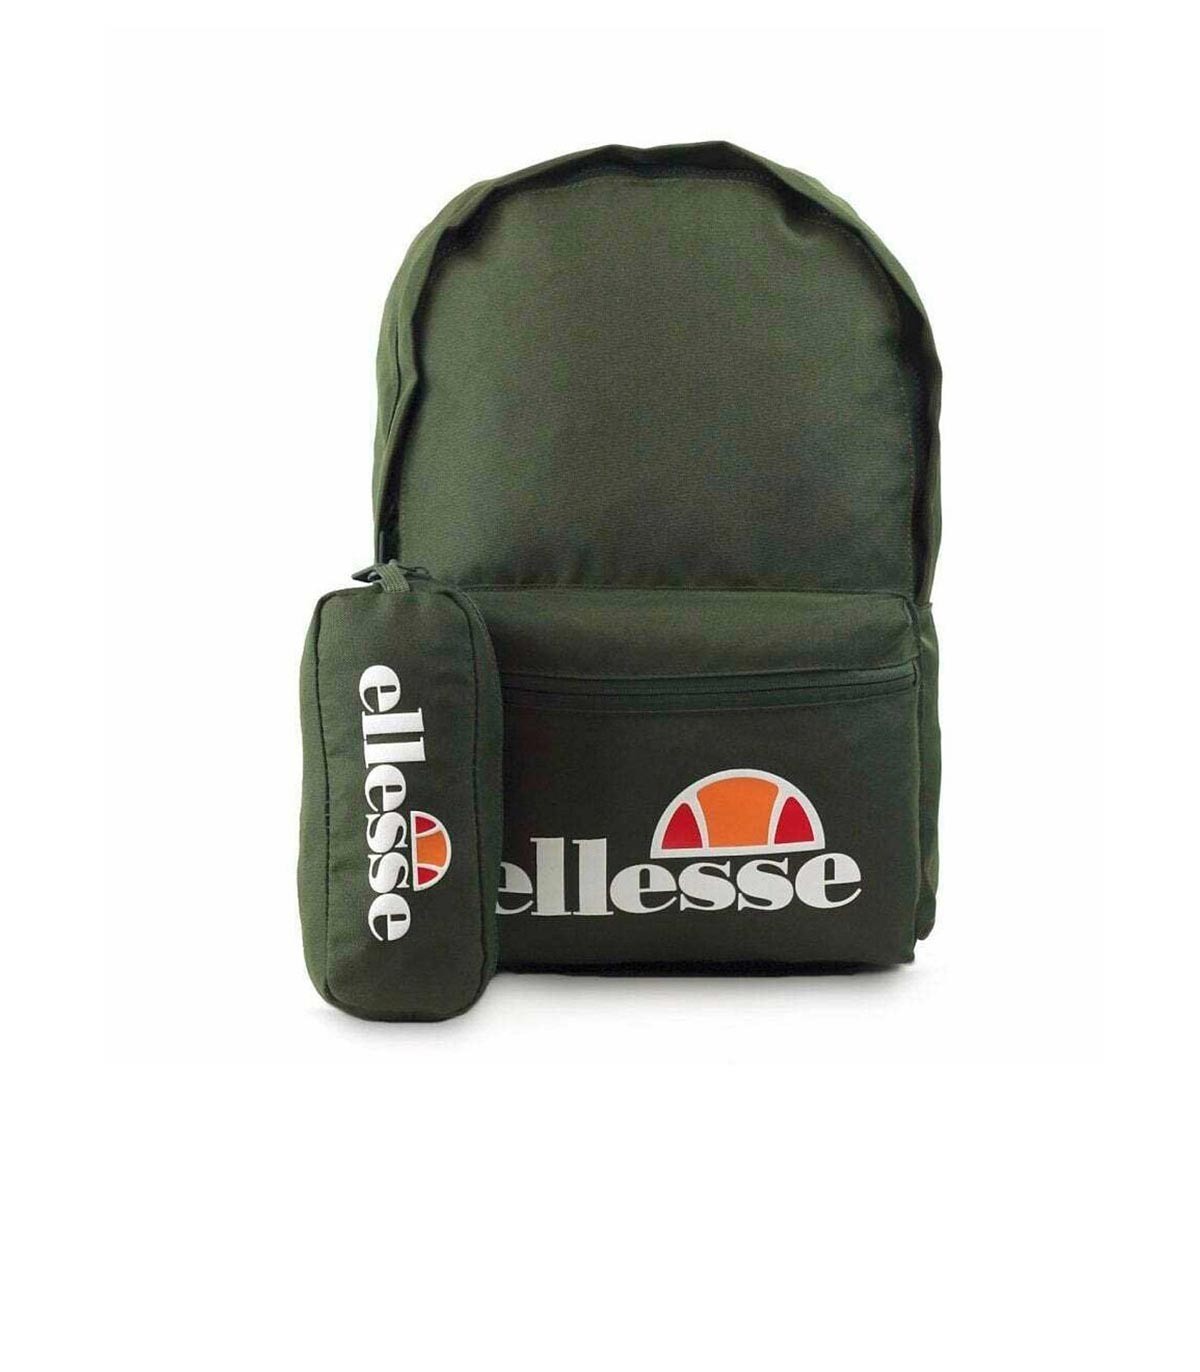 Ellesse - Backpack And Pencil - Verde